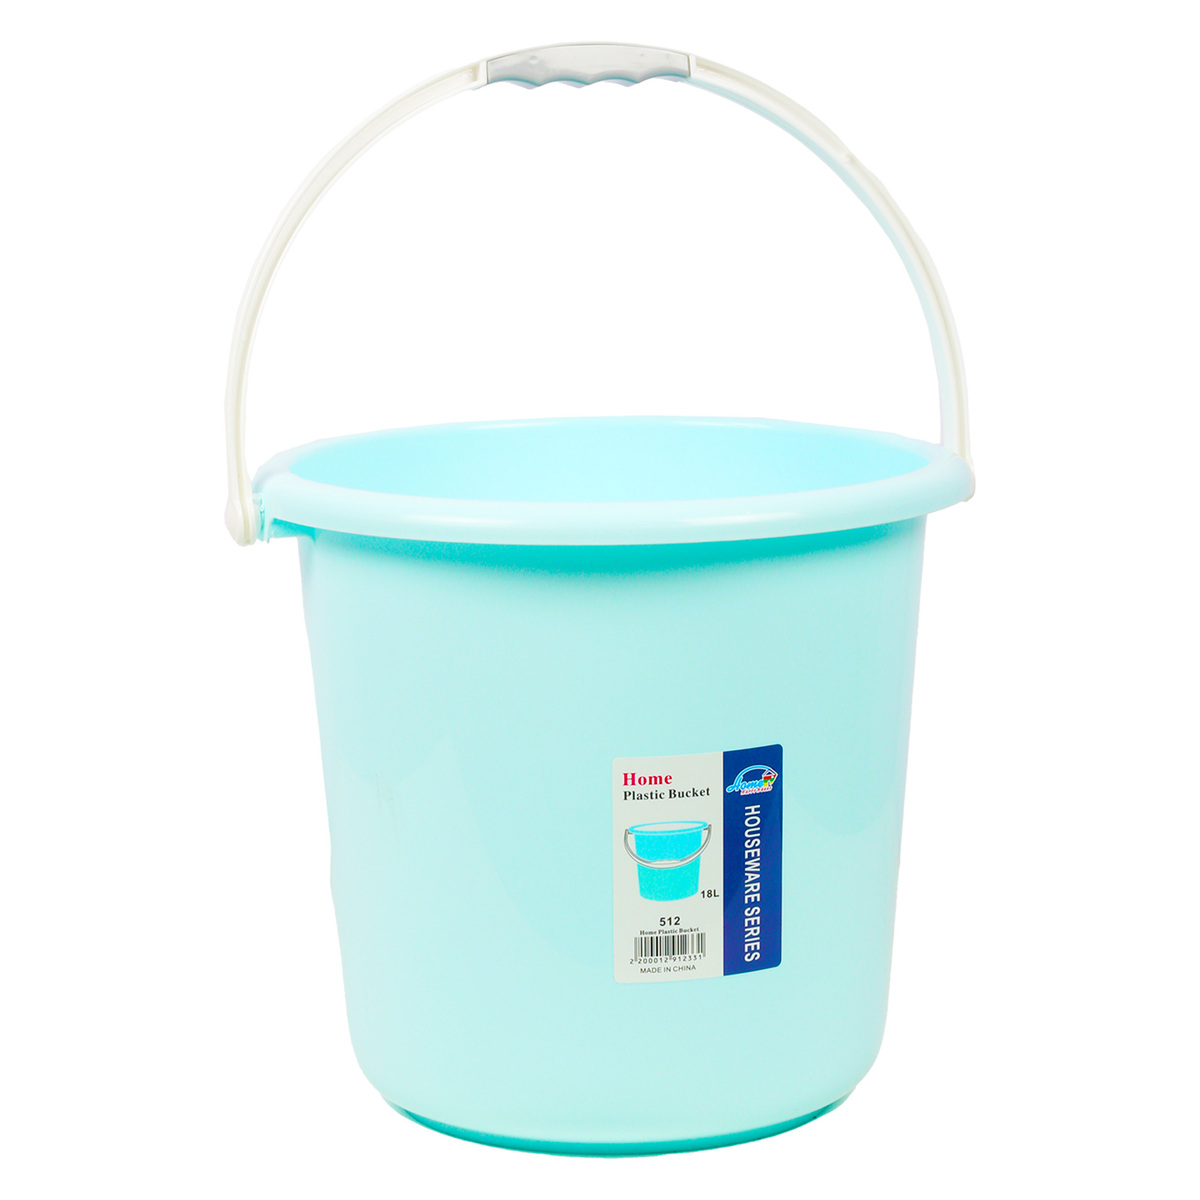 Home Plastic Bucket 512 18 Litre Assorted Colors